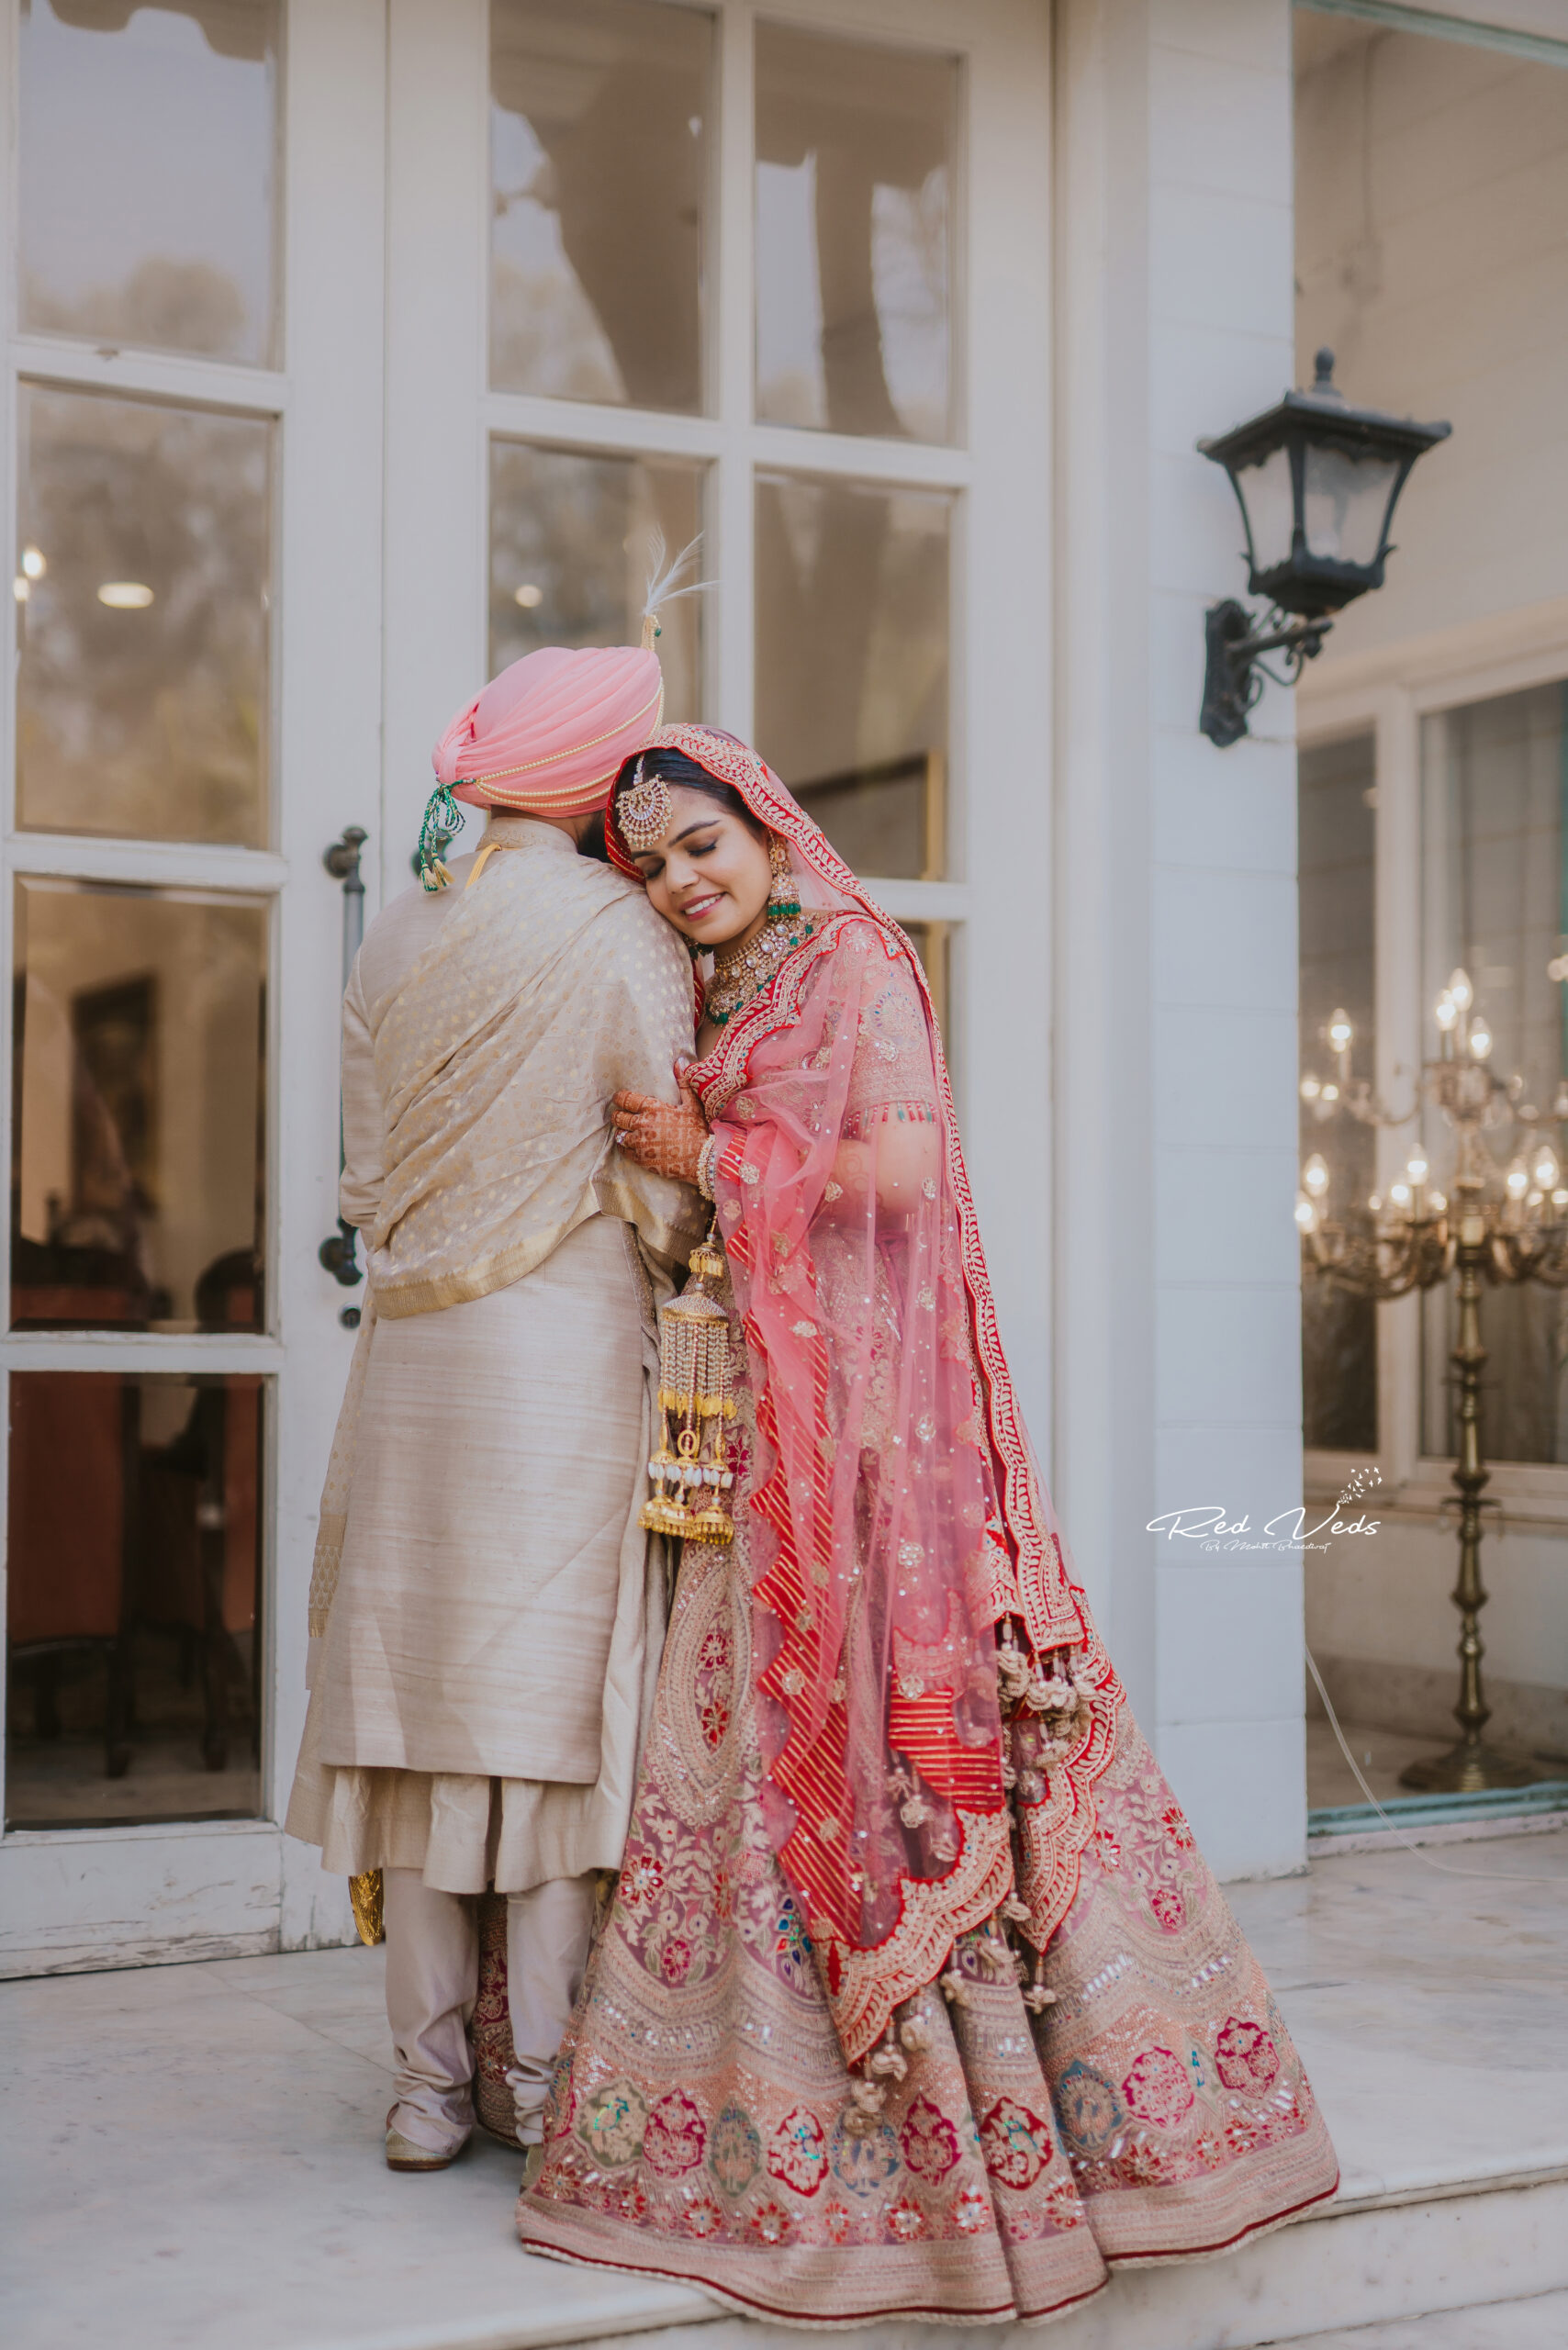 Best Must Have Indian Bride Pictures. Wedding Photo Checklist